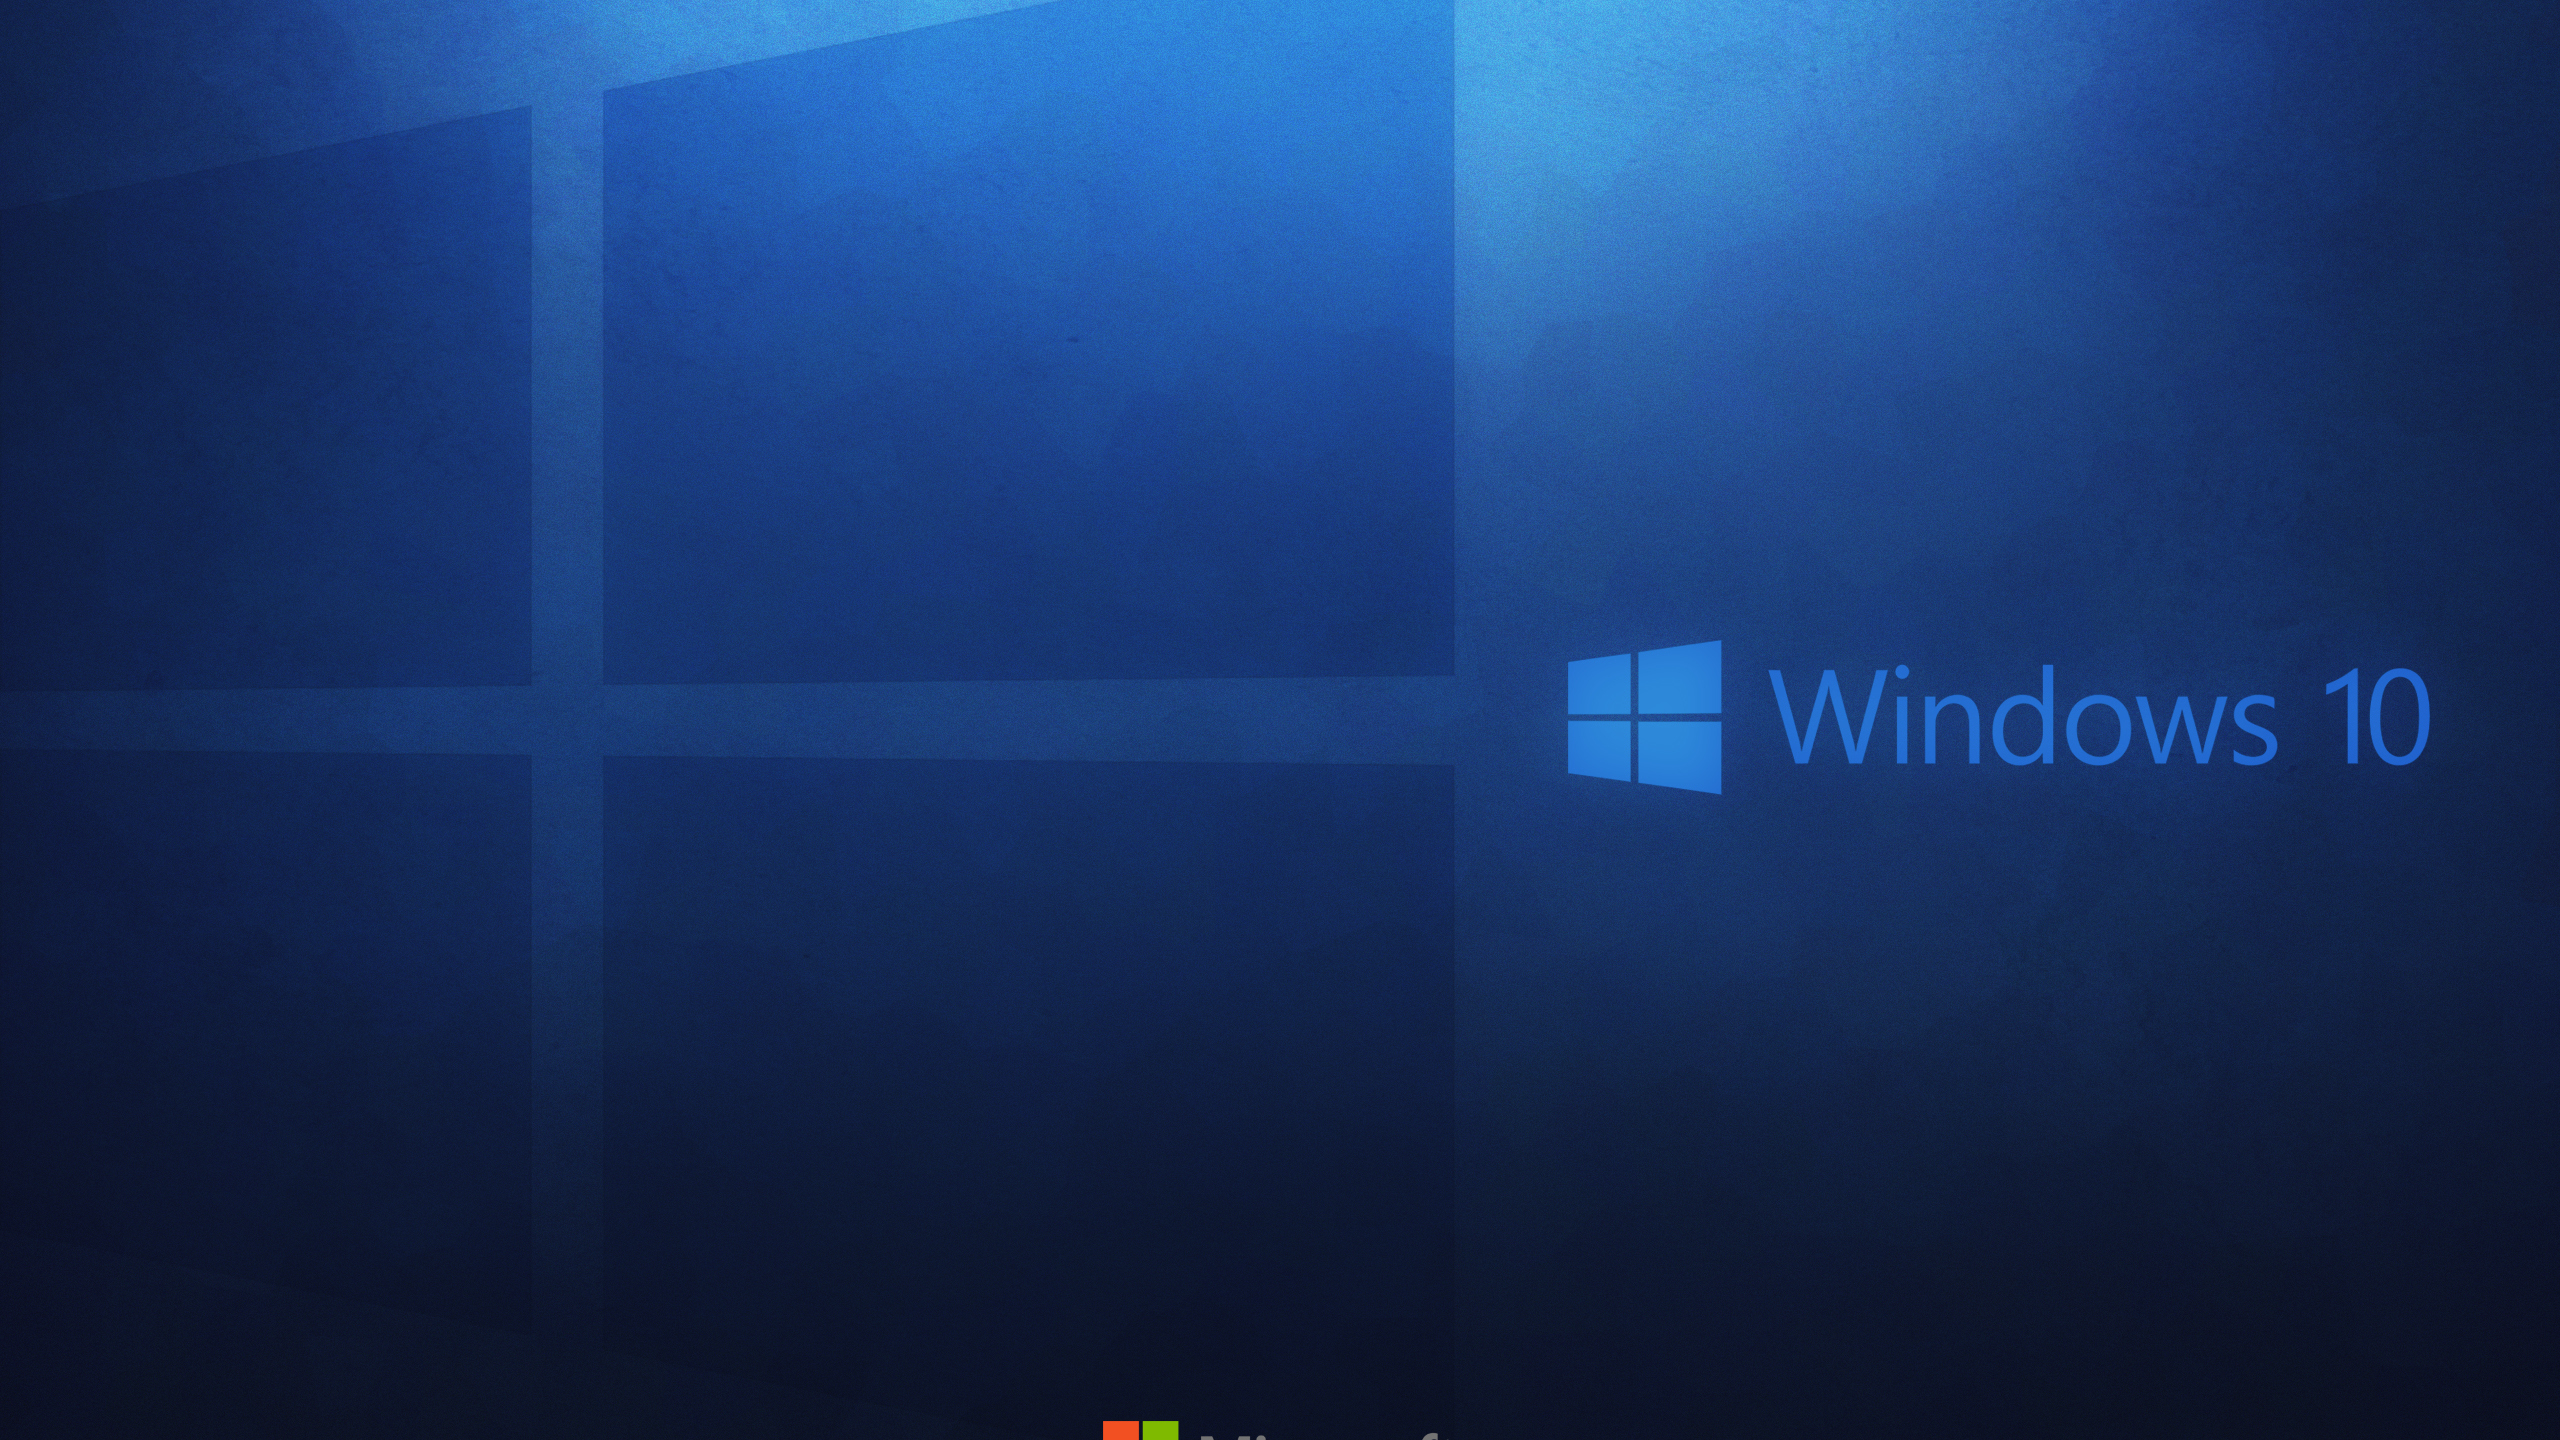 windows 10 os download